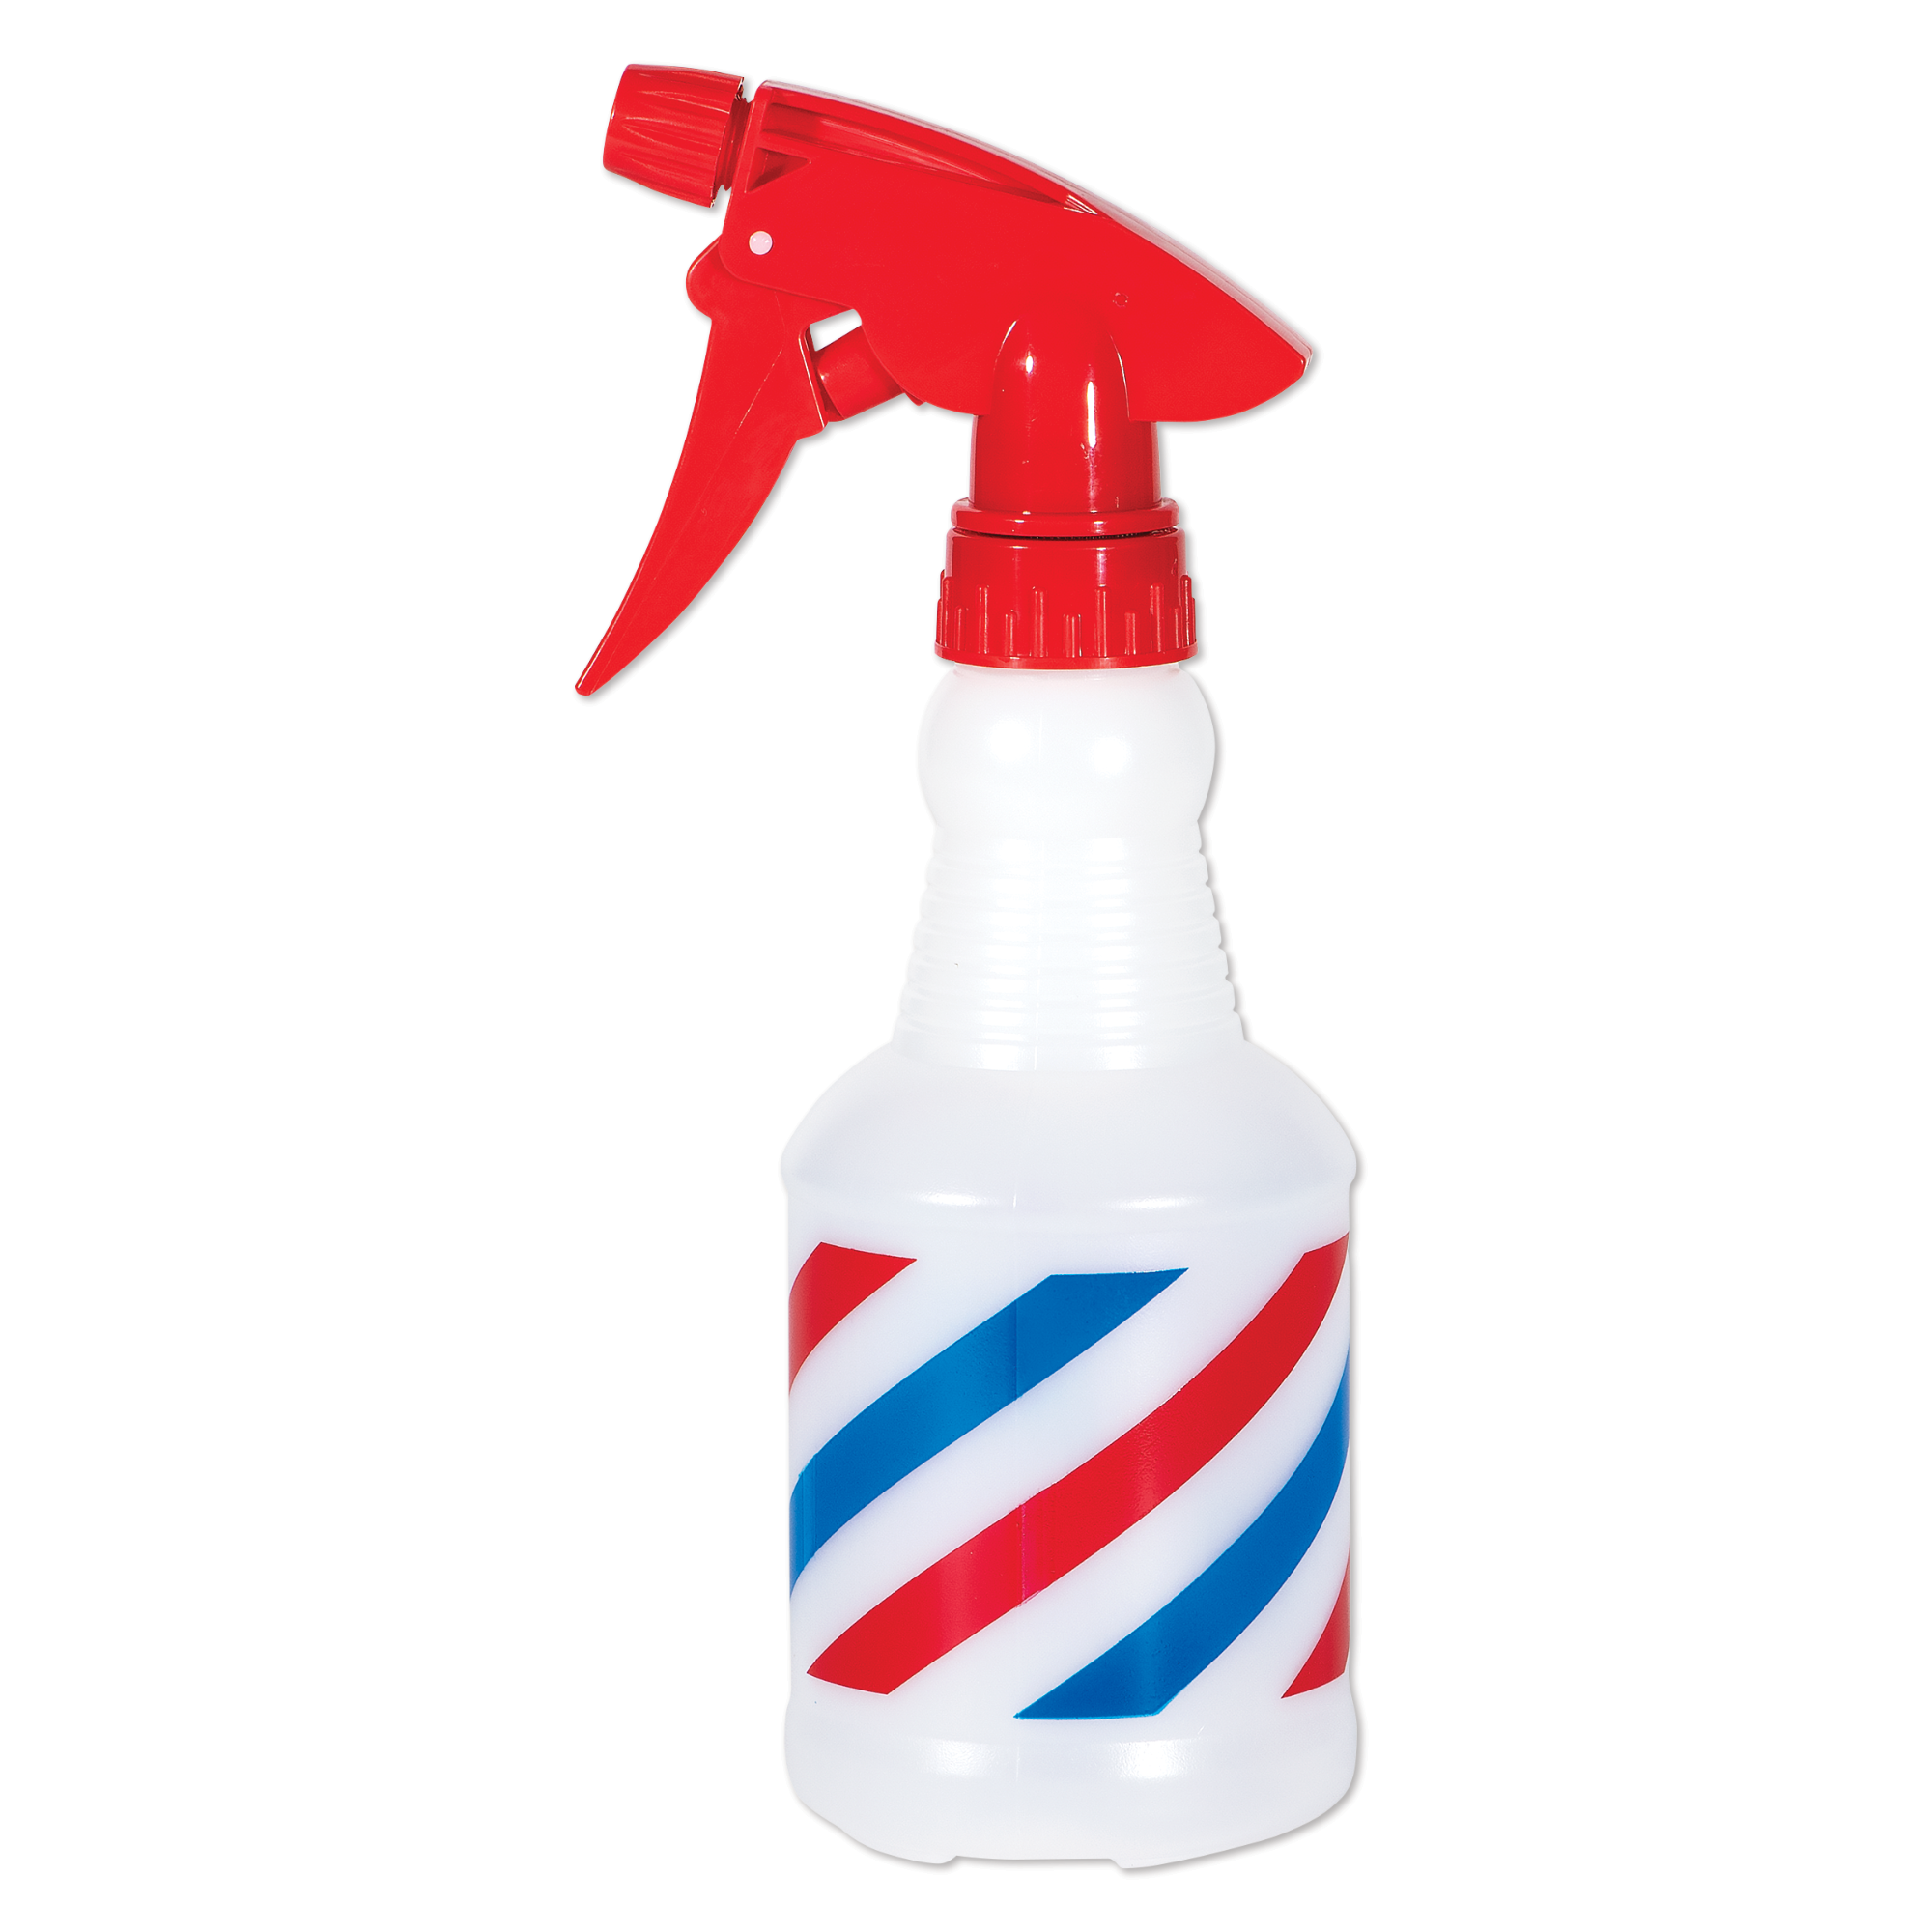 Spray Bottle with Barber Pole Design, 12 oz.